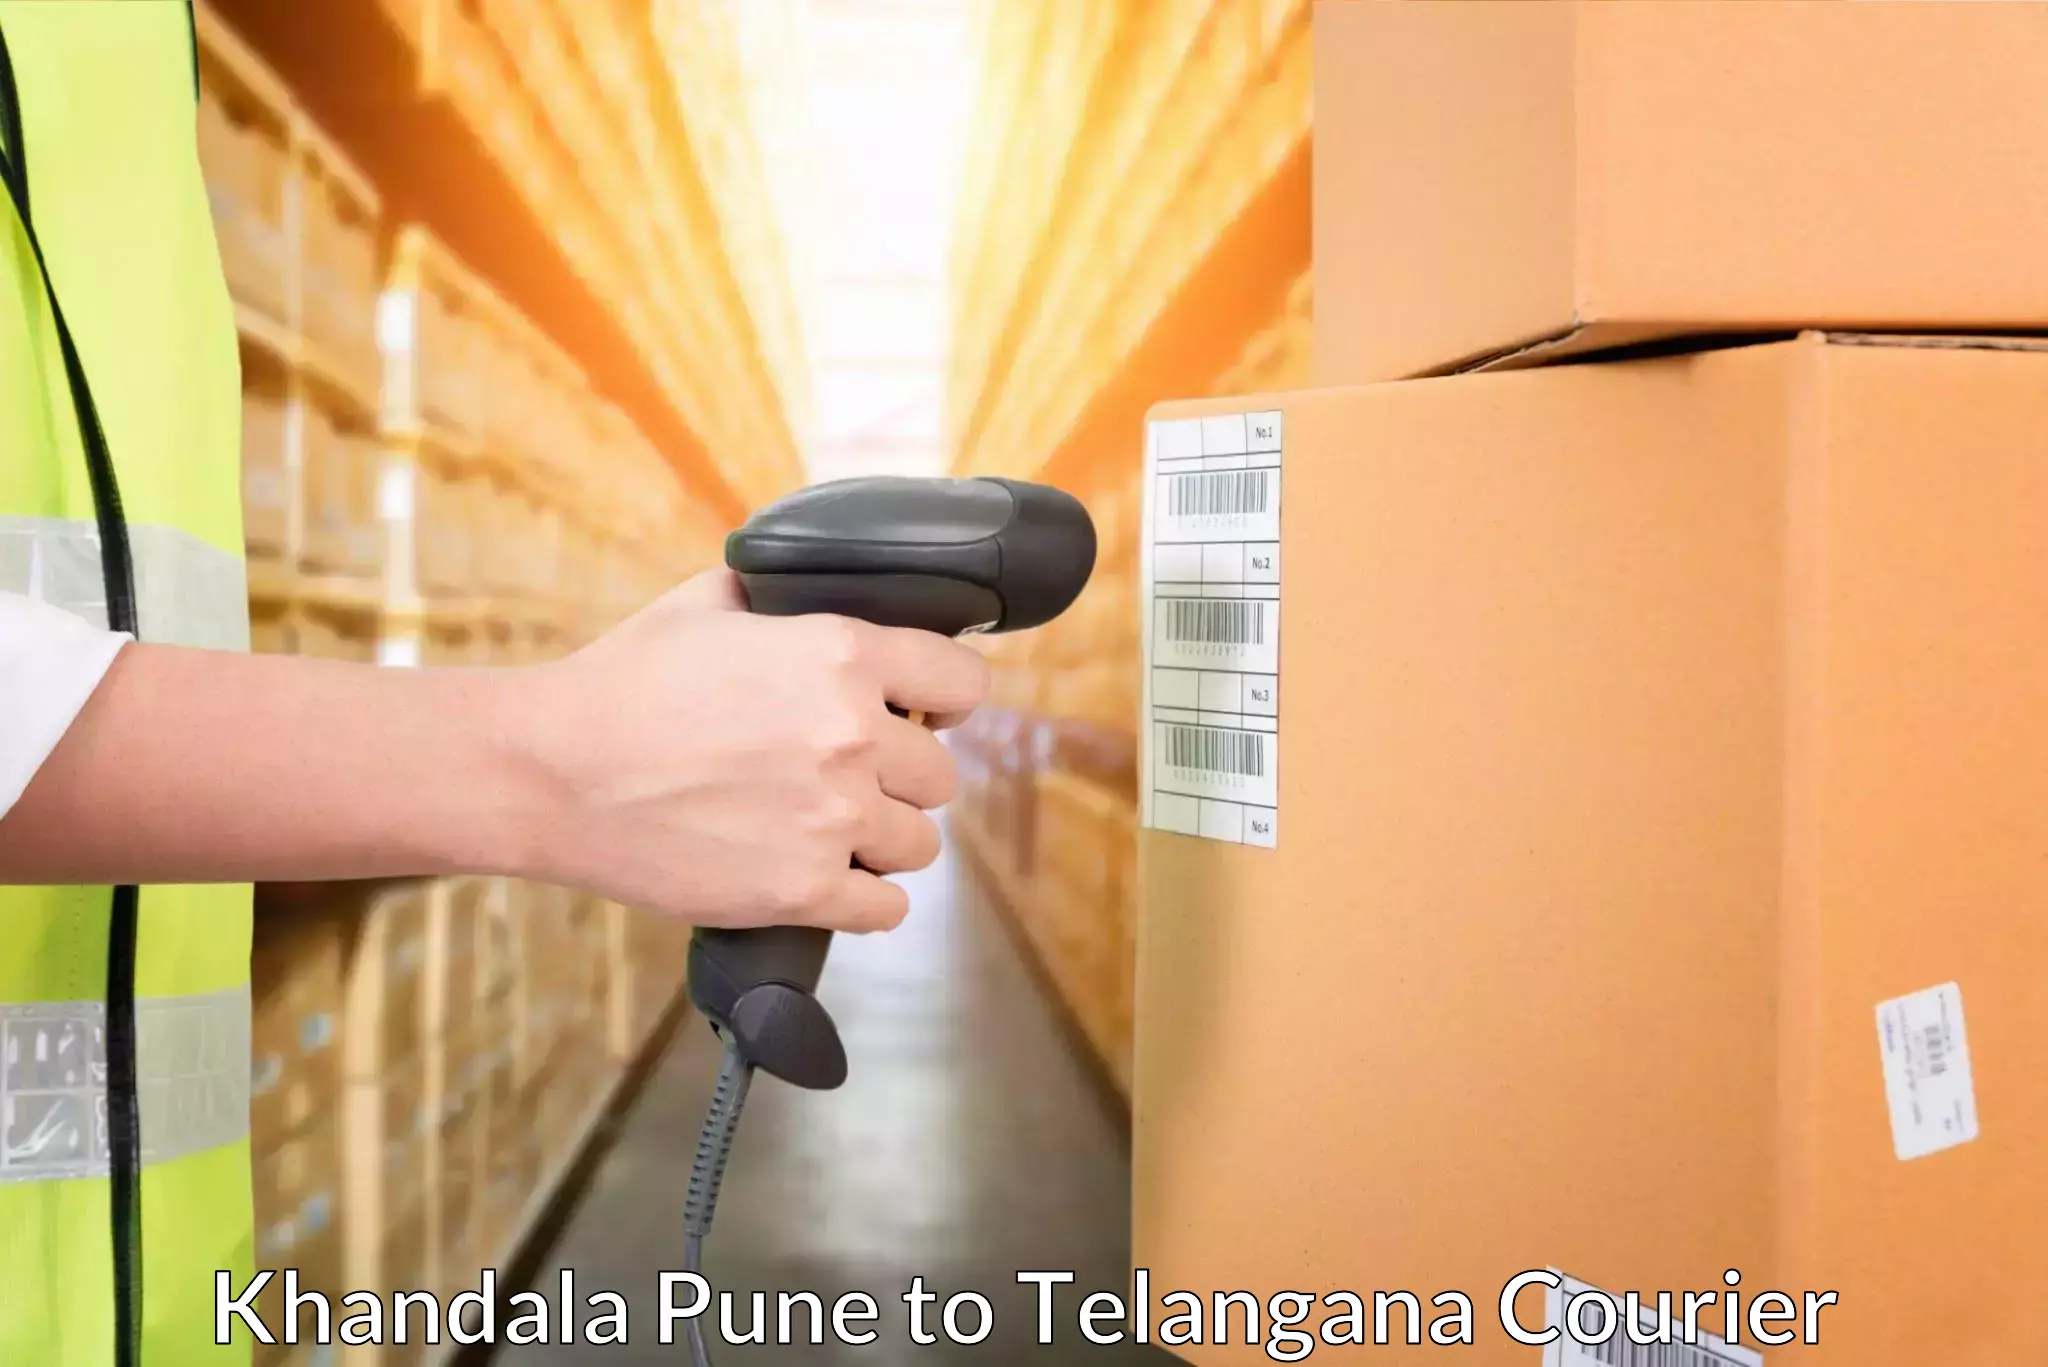 Urban courier service Khandala Pune to Vikarabad